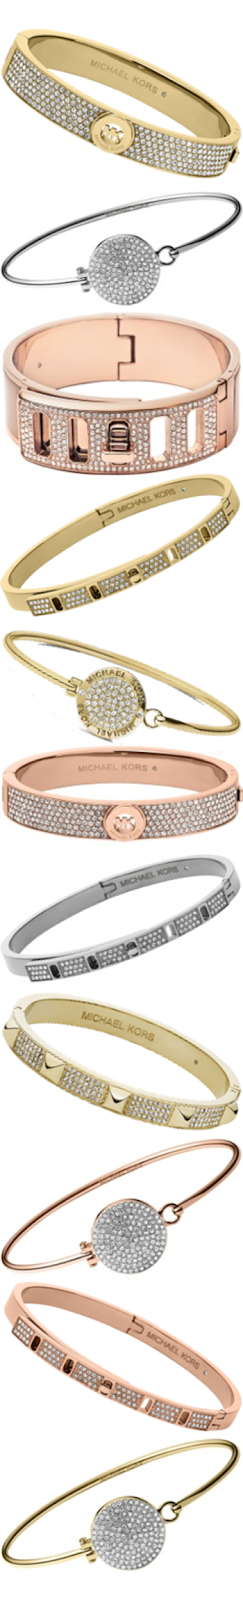 Michael Kors Bracelets